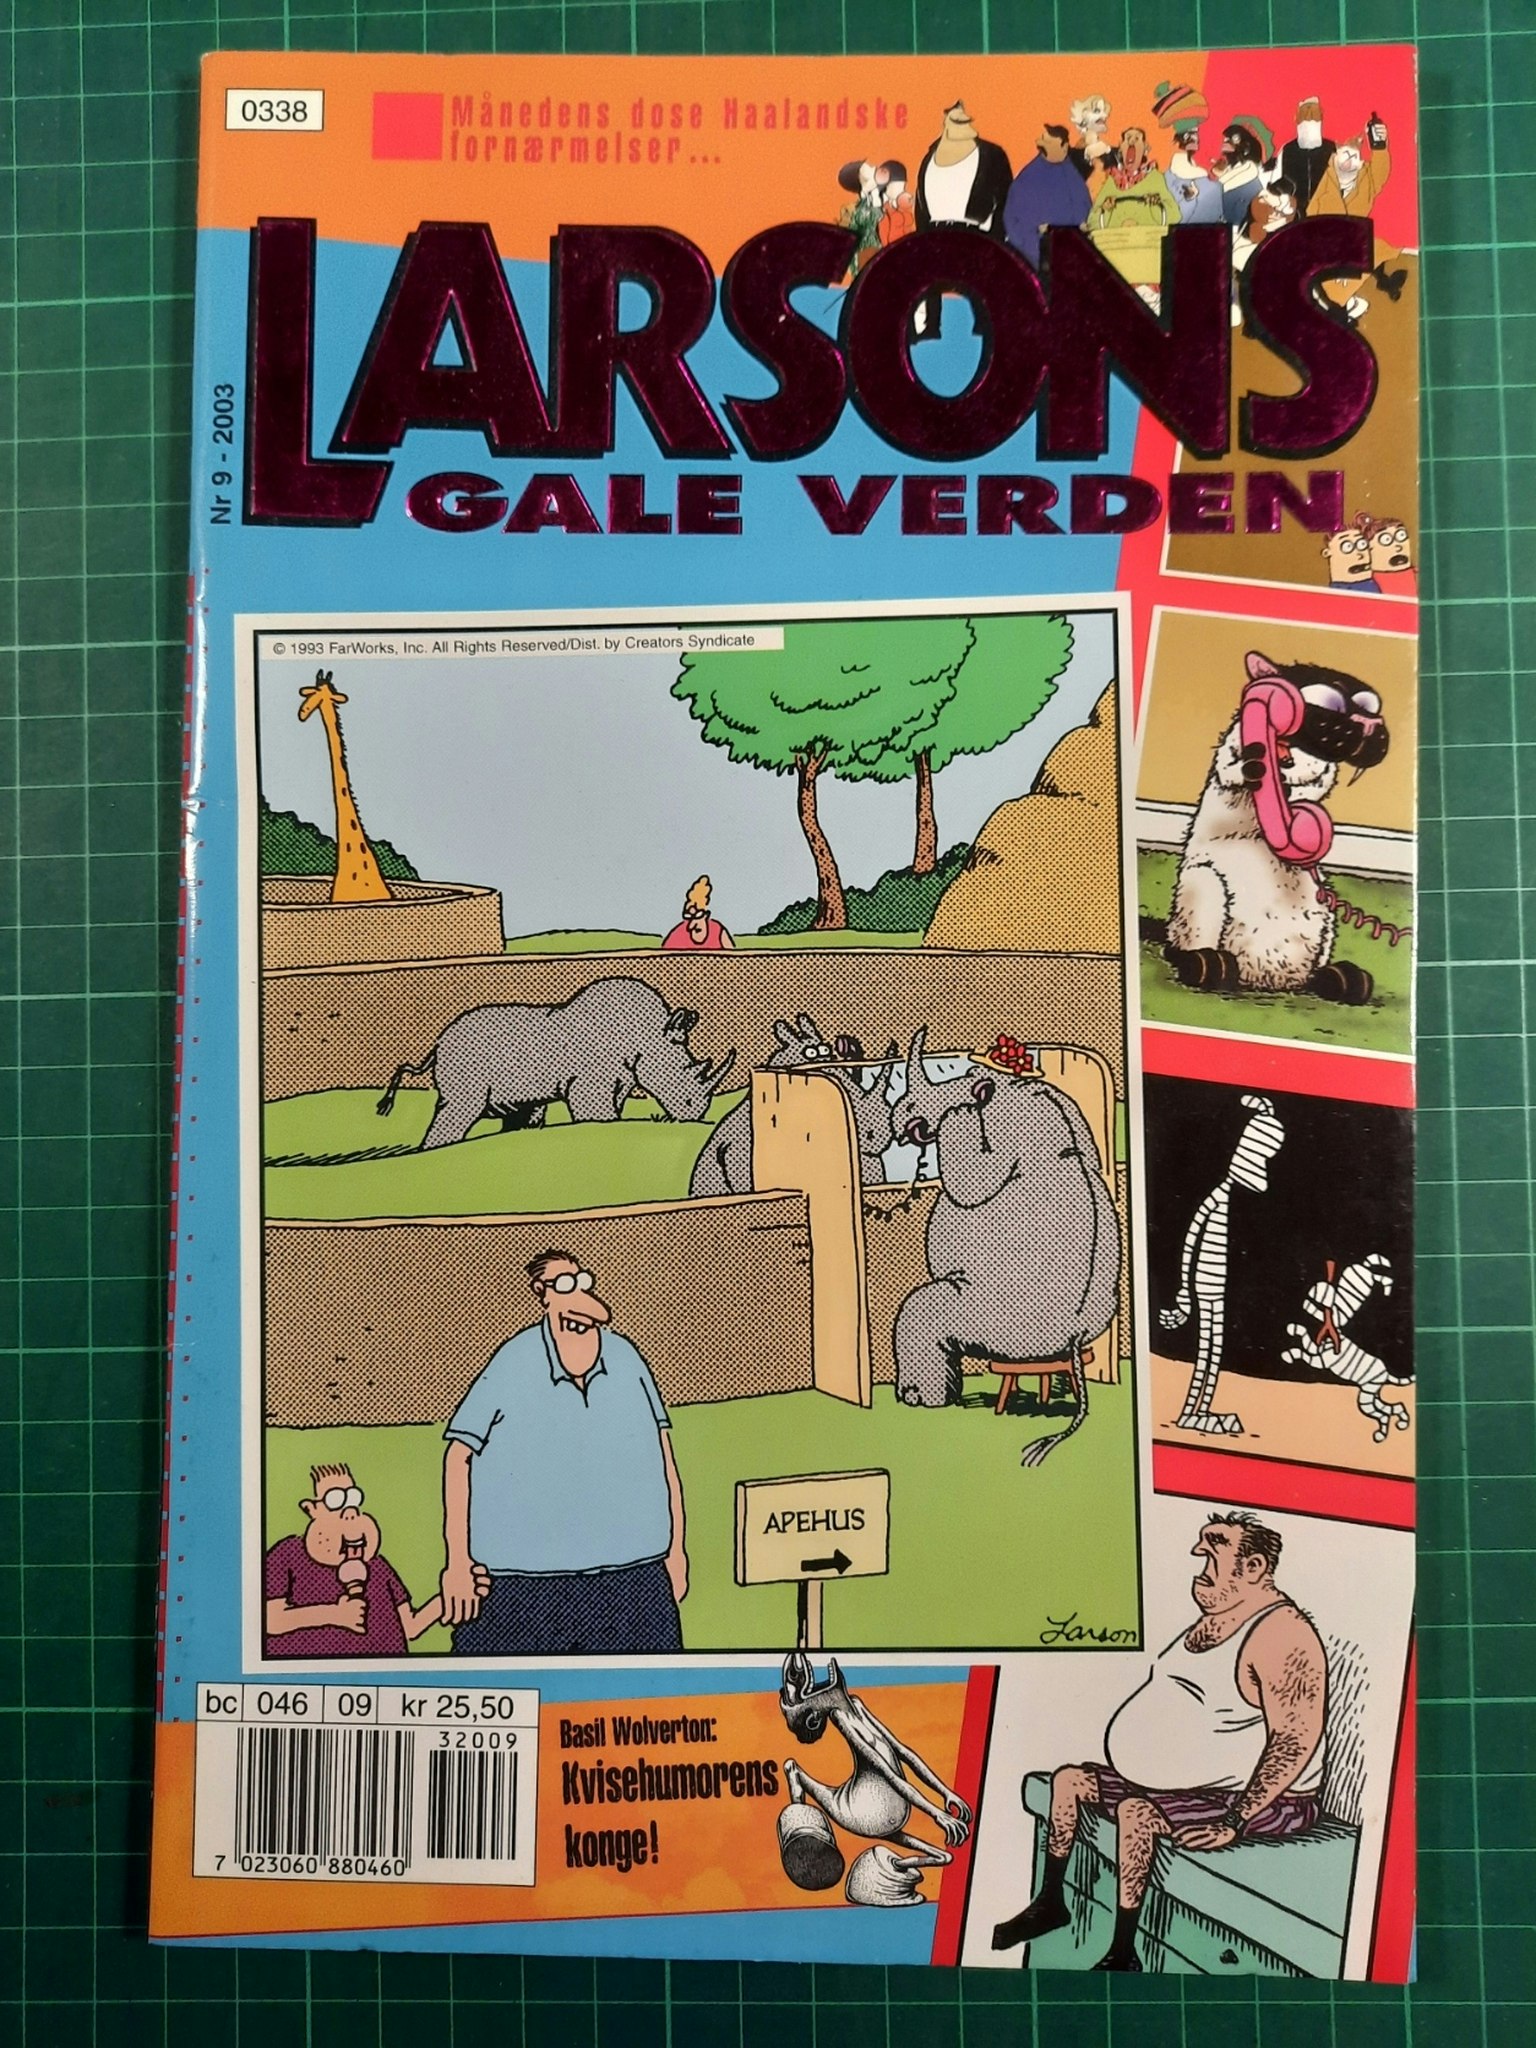 Larsons gale verden 2003 - 09